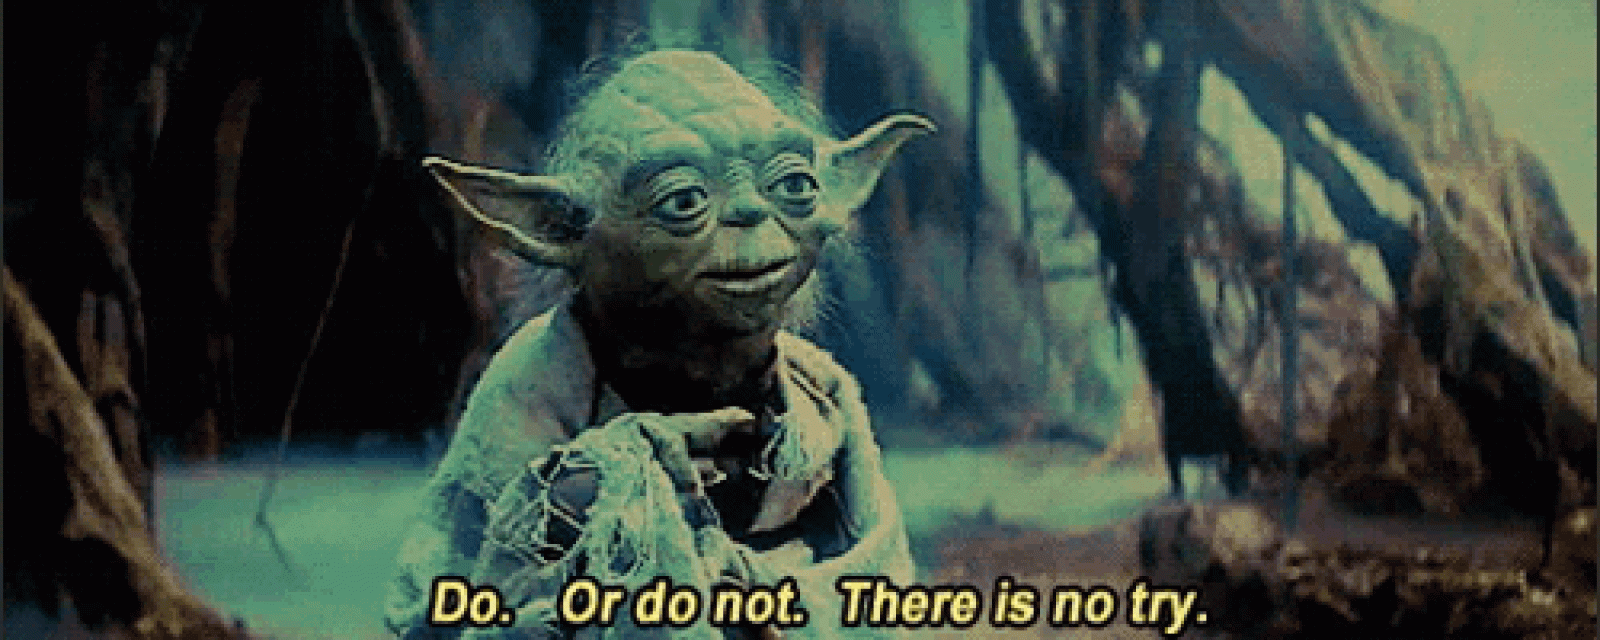 Yoda uitspraak